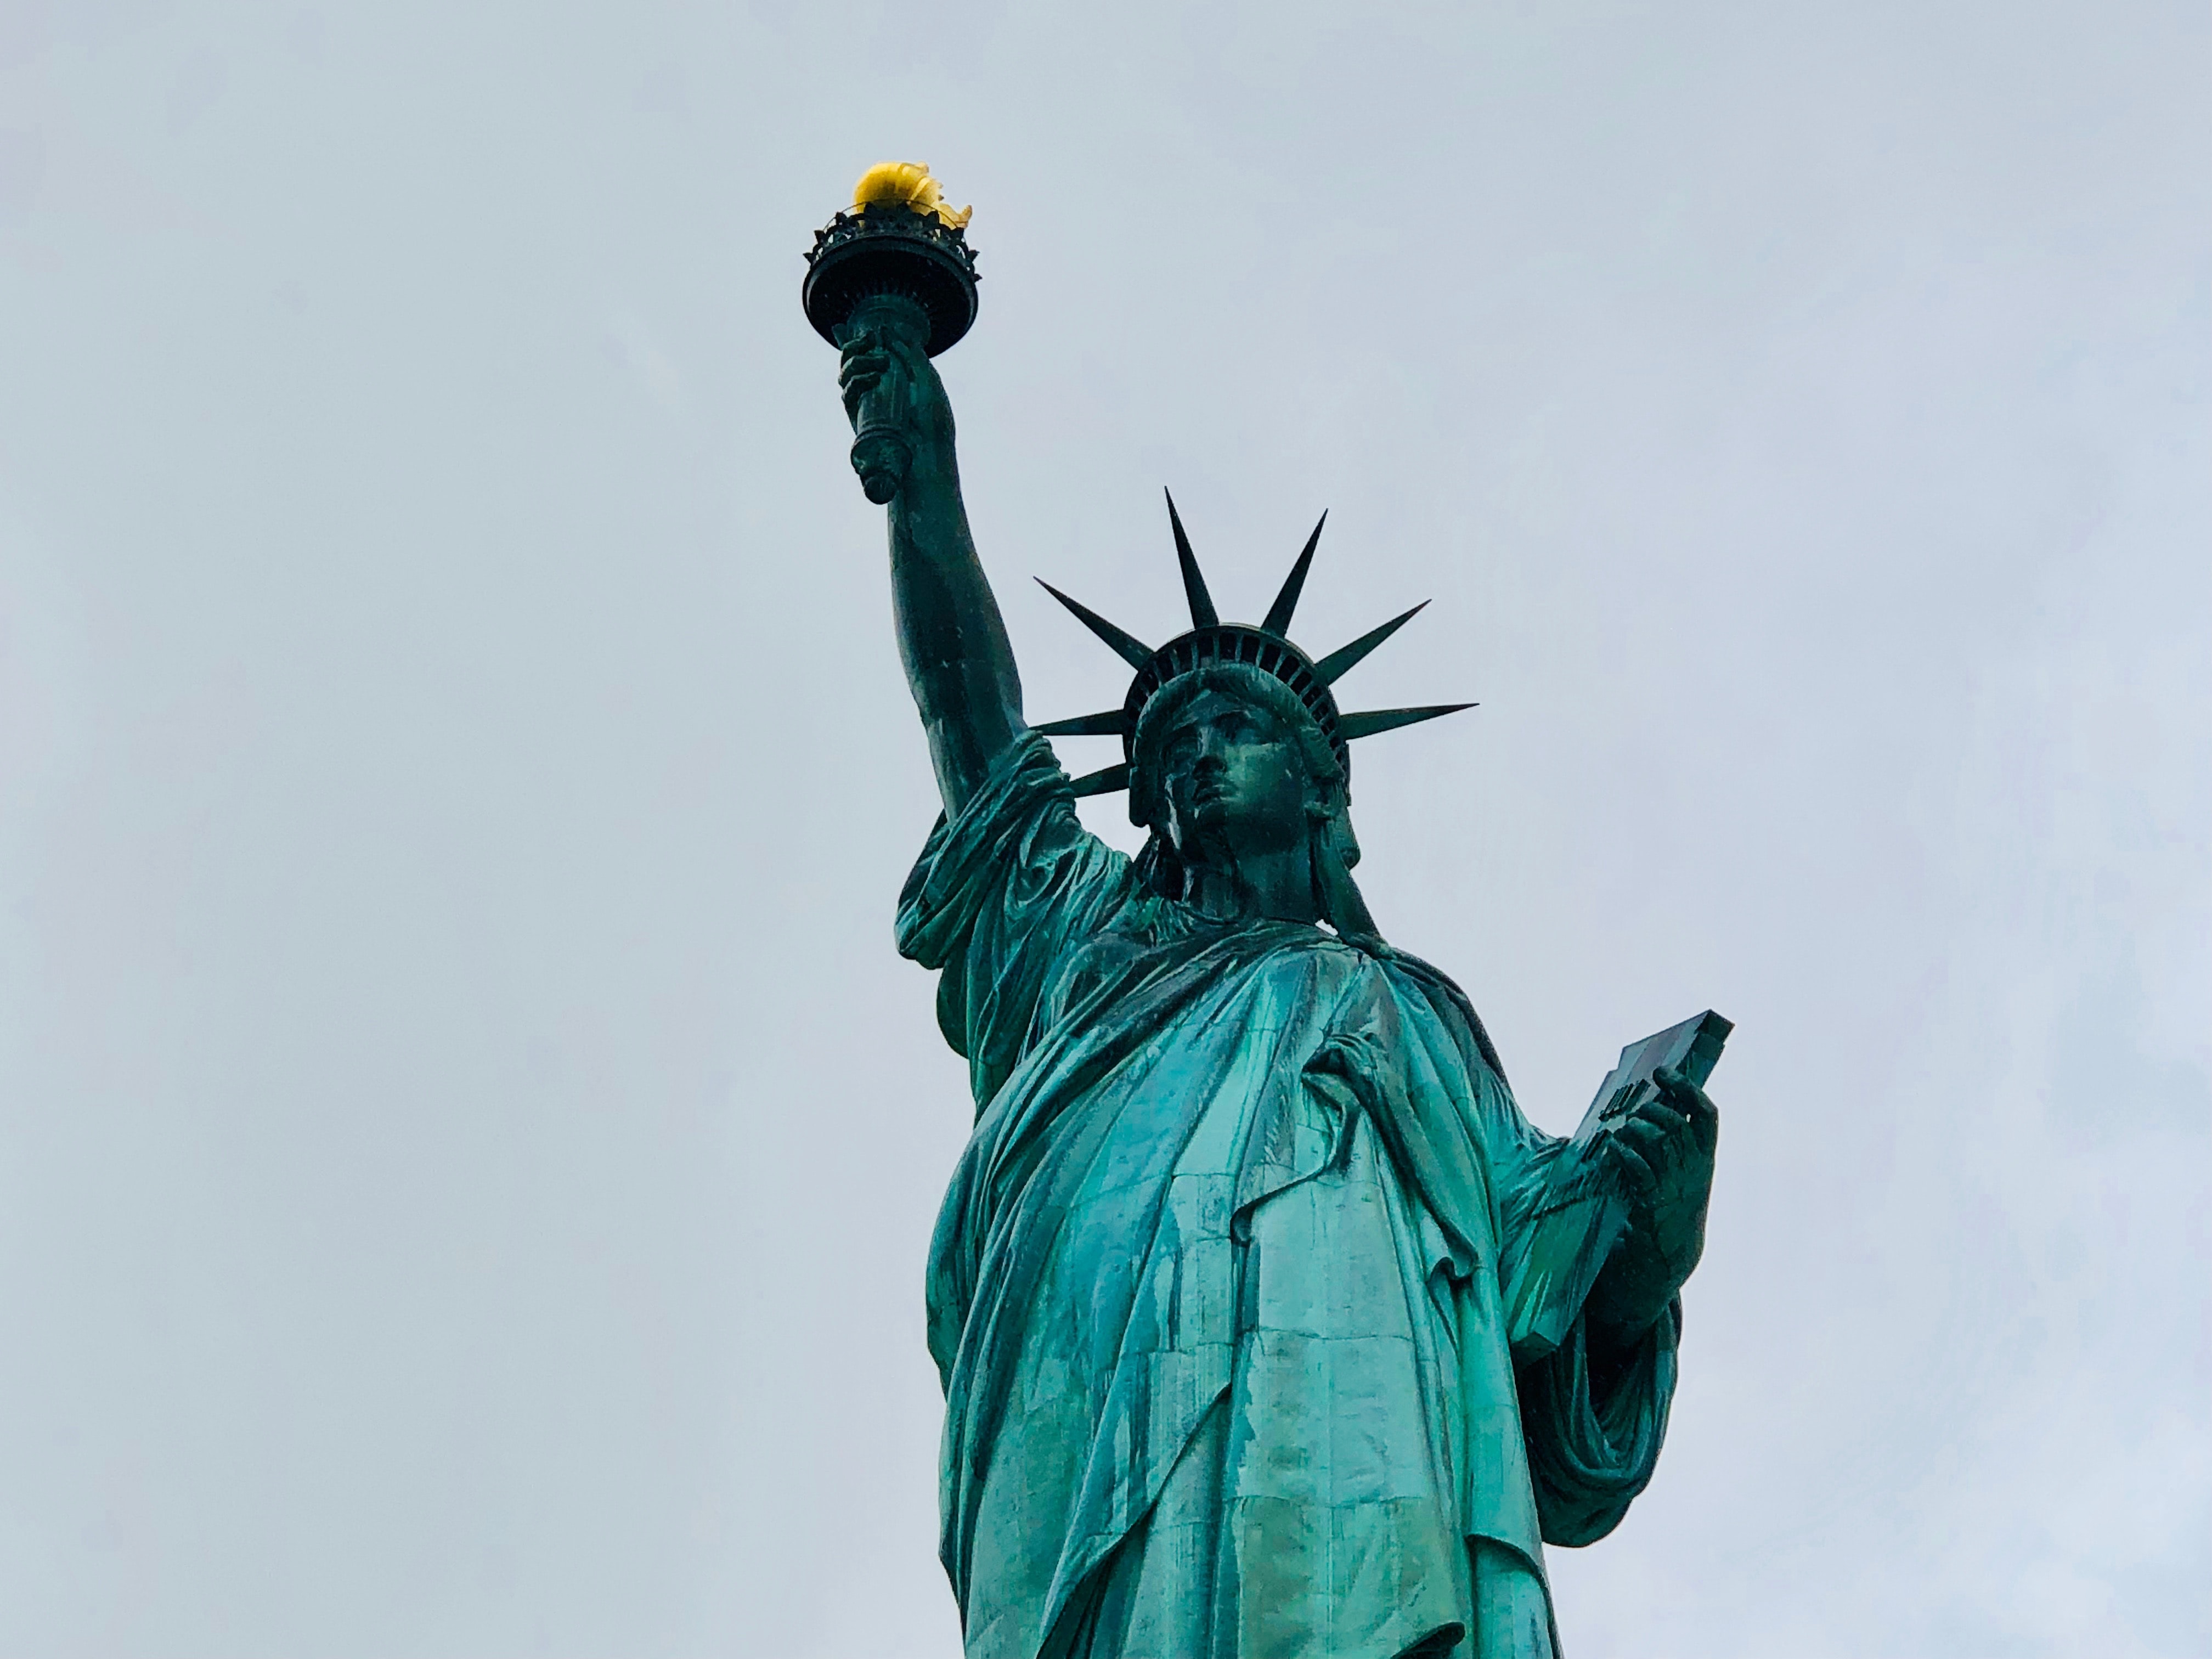 Statue of Liberty; imag eby Simon Fairhurst, via Unsplash.com.